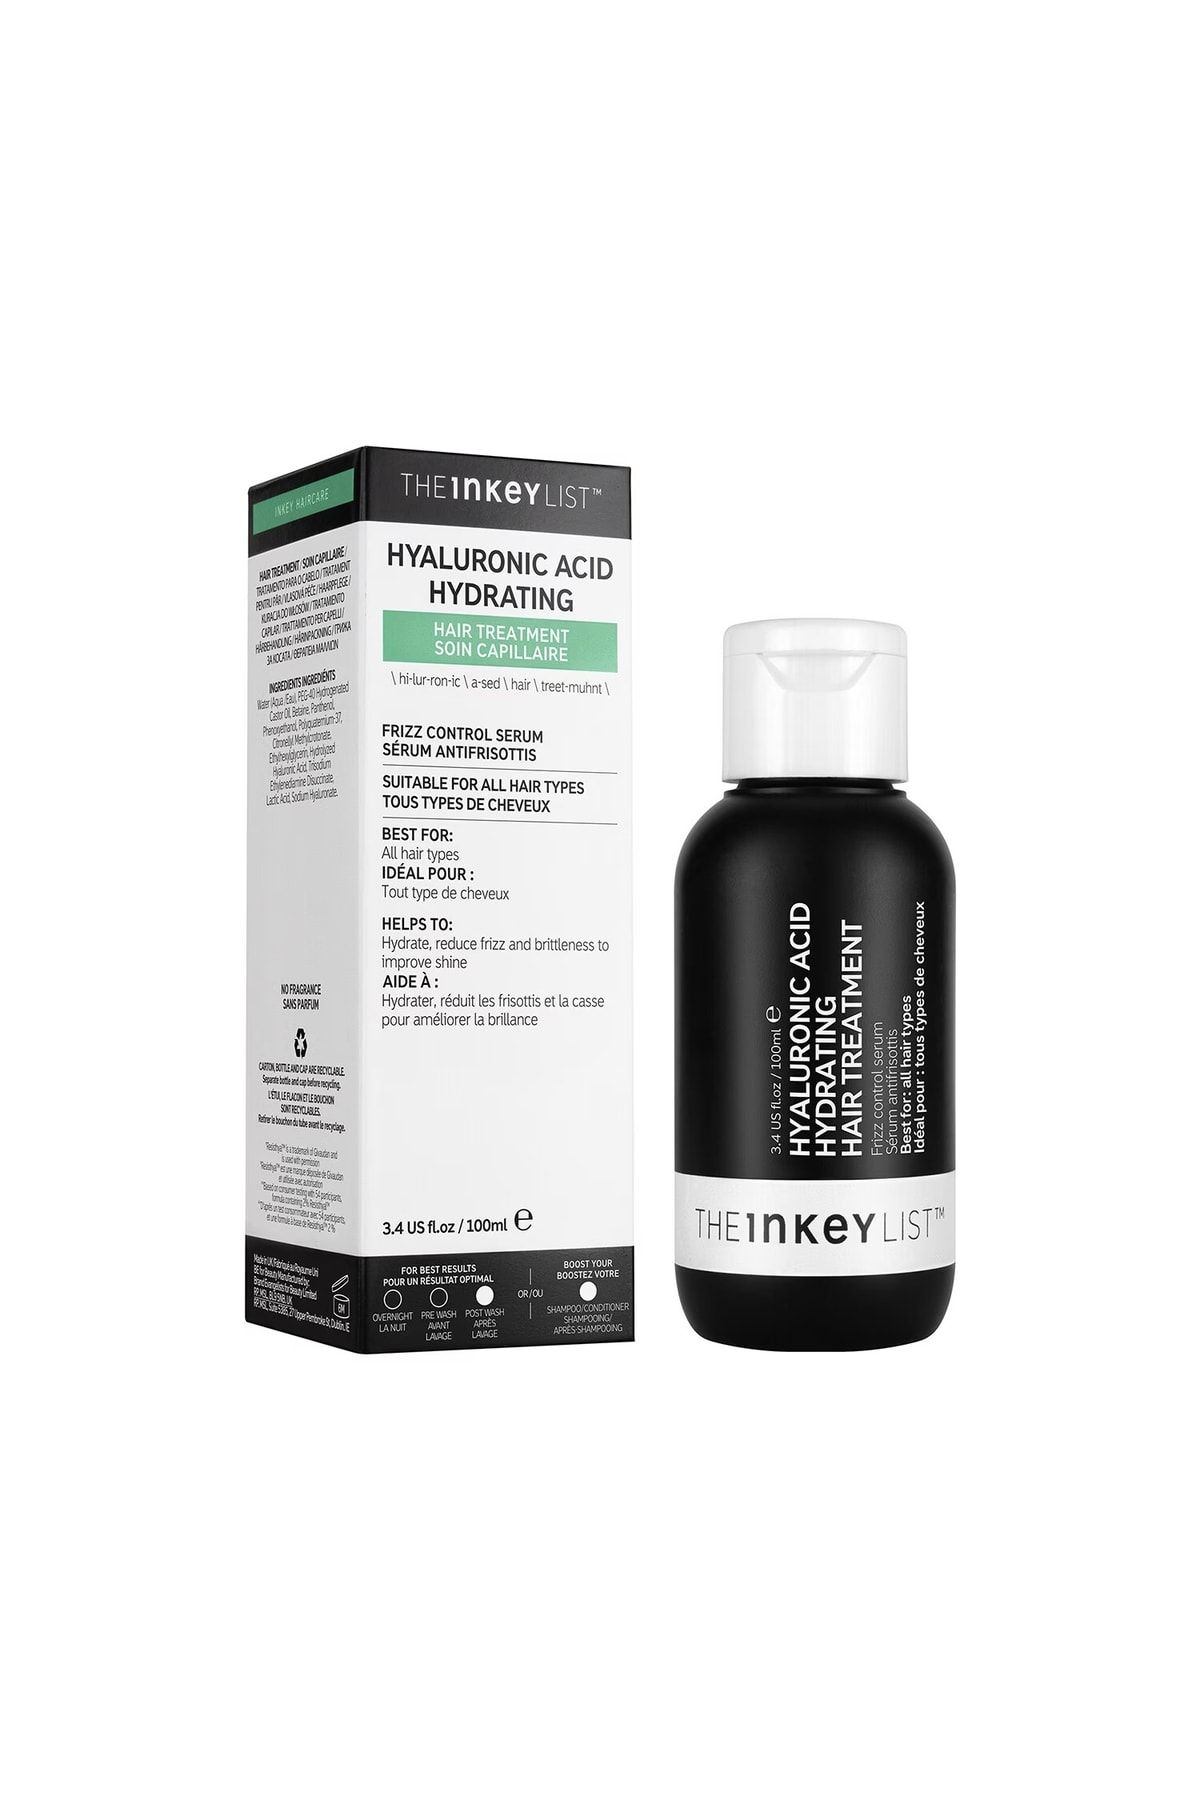 THE INKEY LIST Hyaluronic Acid Hydrating Elektriklenme Karşıtı Güçlendirici Saç Serumu 100ml